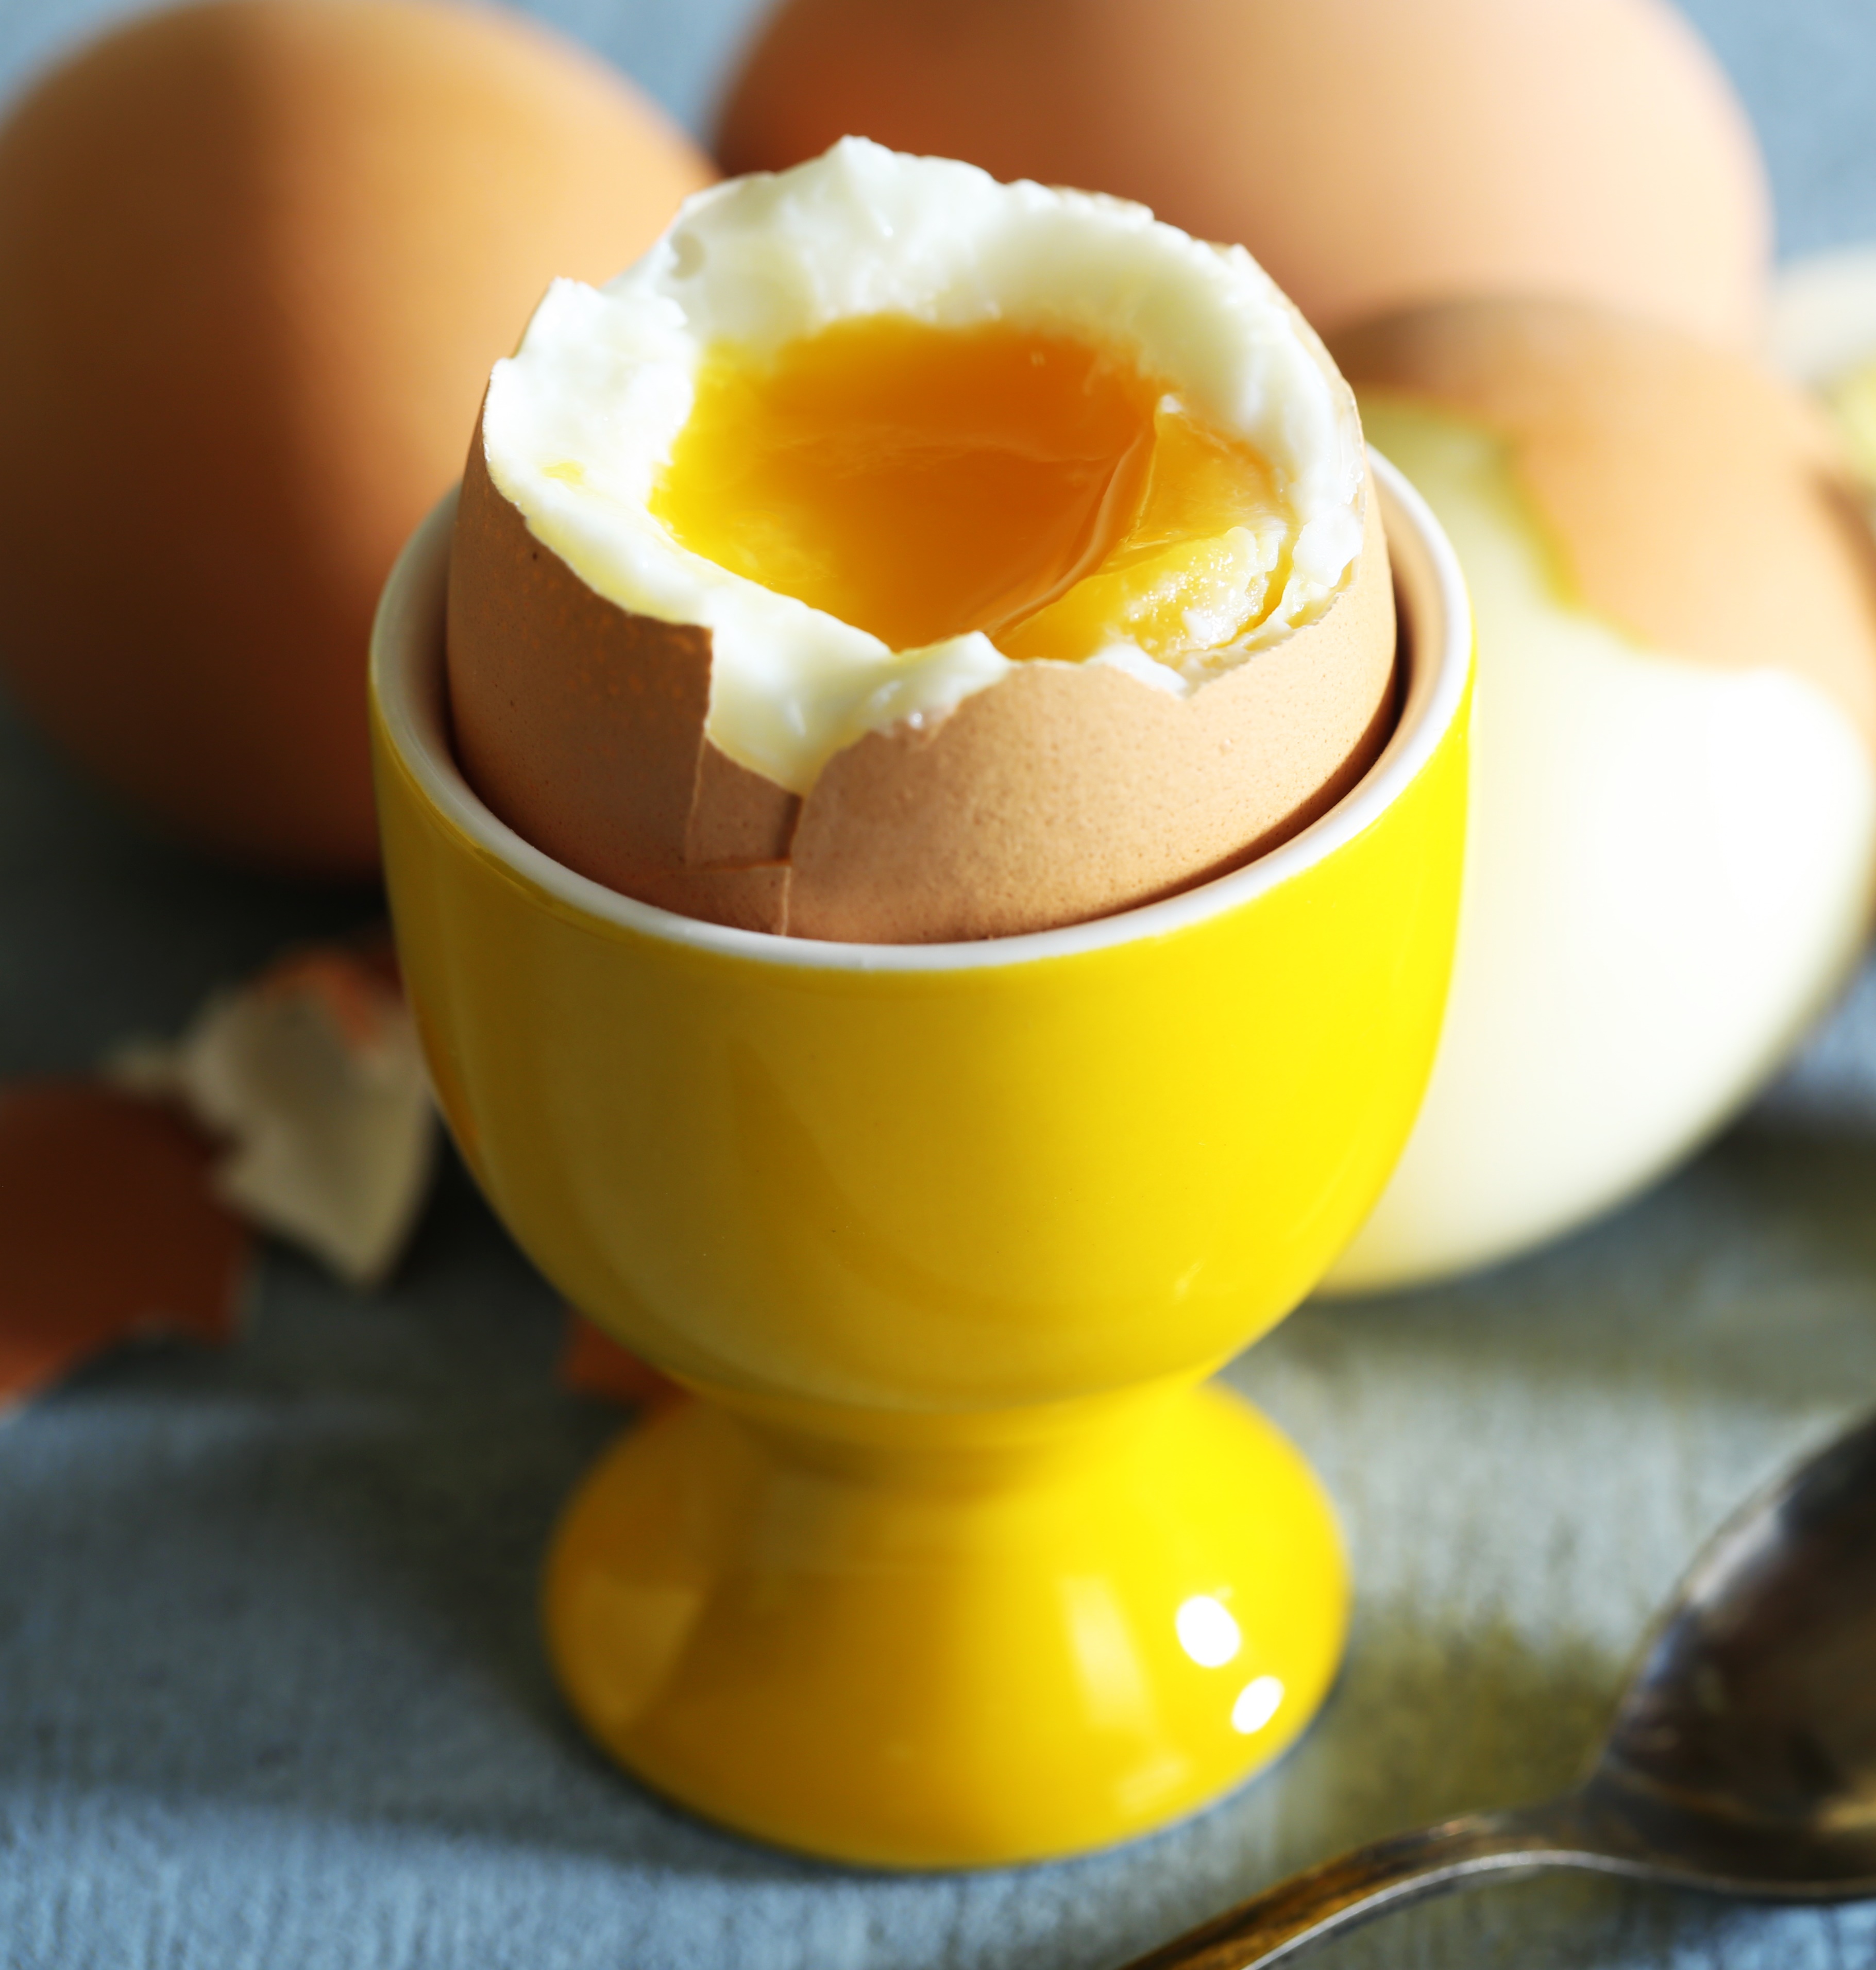 https://photos.bigoven.com/recipe/hero/perfect-soft-boiled-eggs-f87fbe.jpg